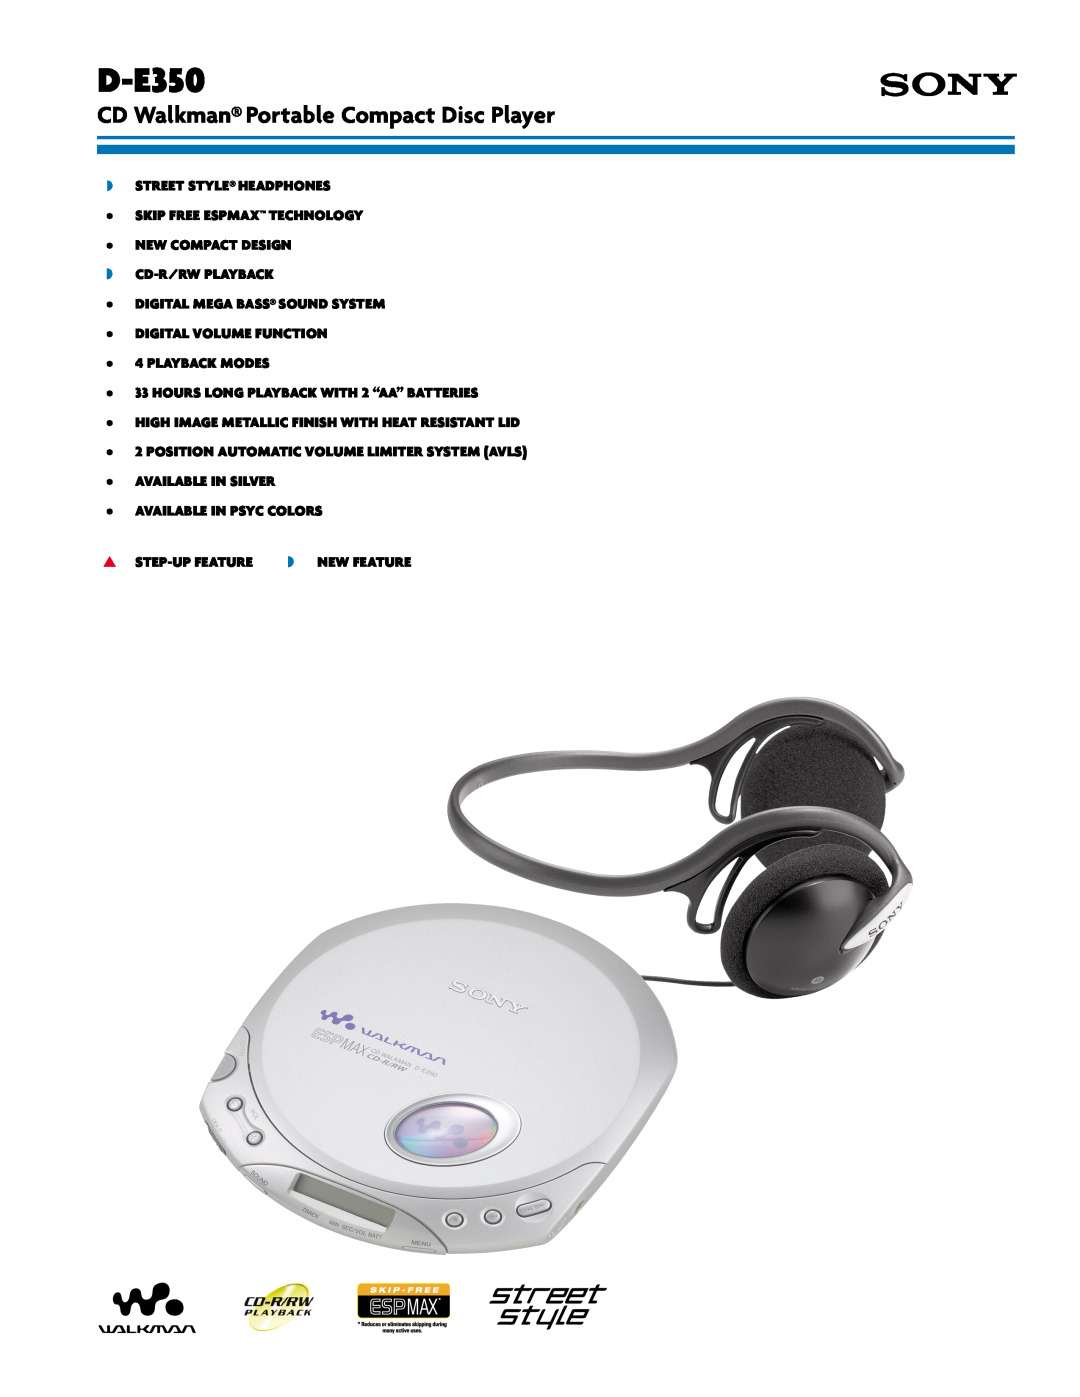 Sony D-E350 manual CD Walkman Portable Compact Disc Player 